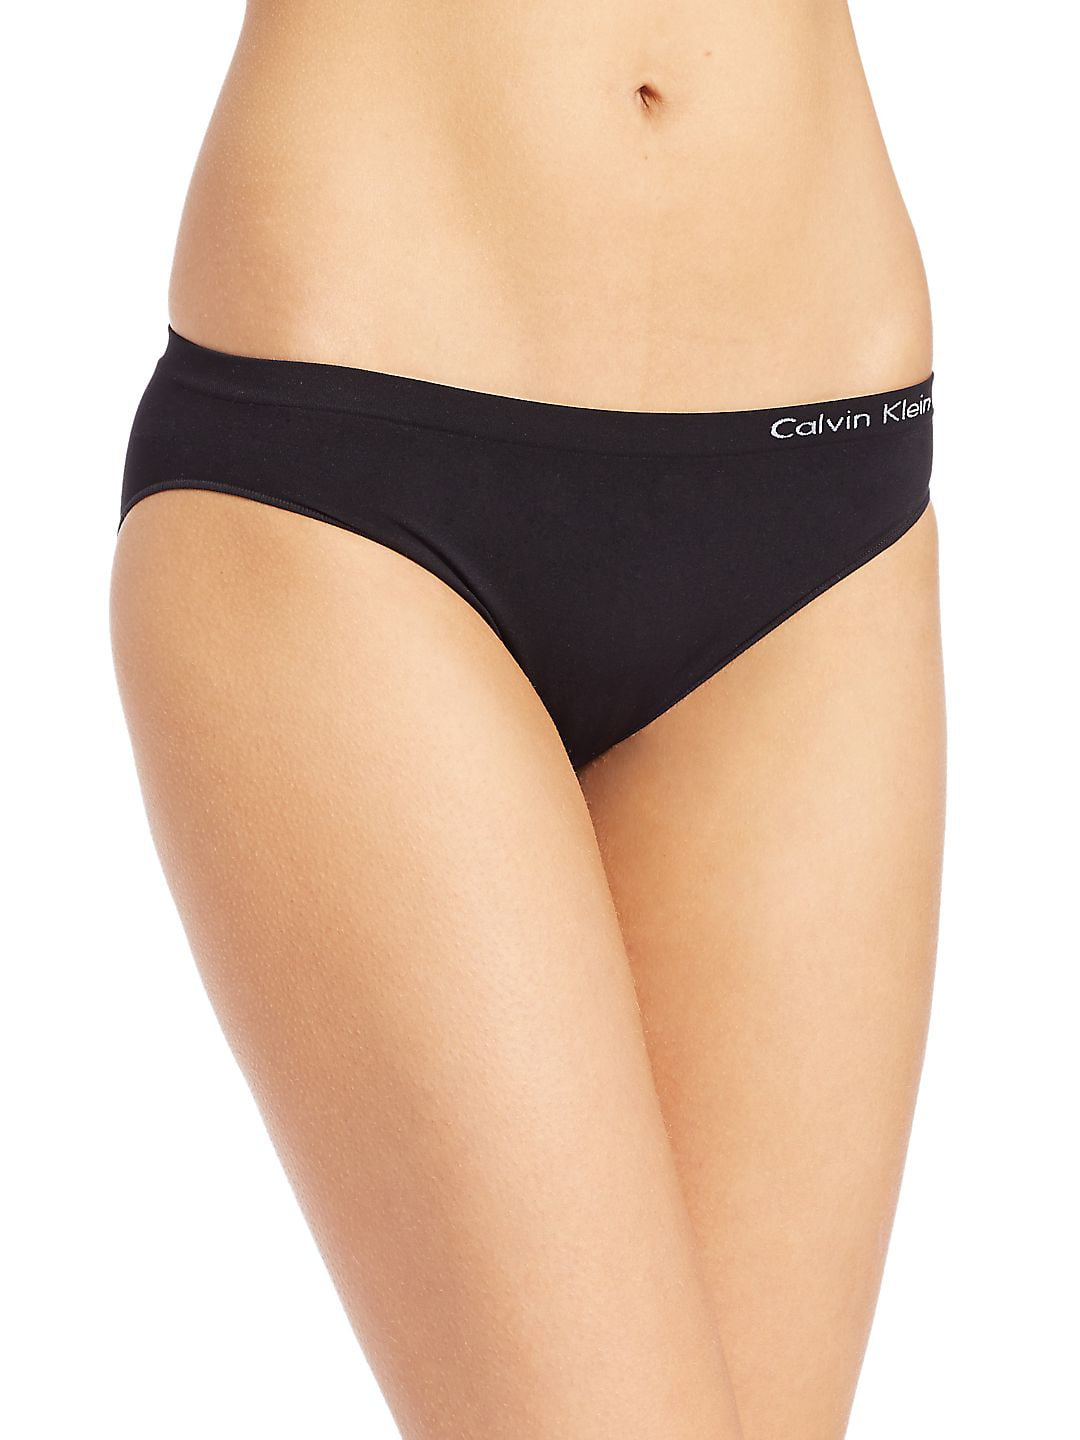 Calvin Klein Women's Pure Seamless Bikini Panty, Black, X-Small